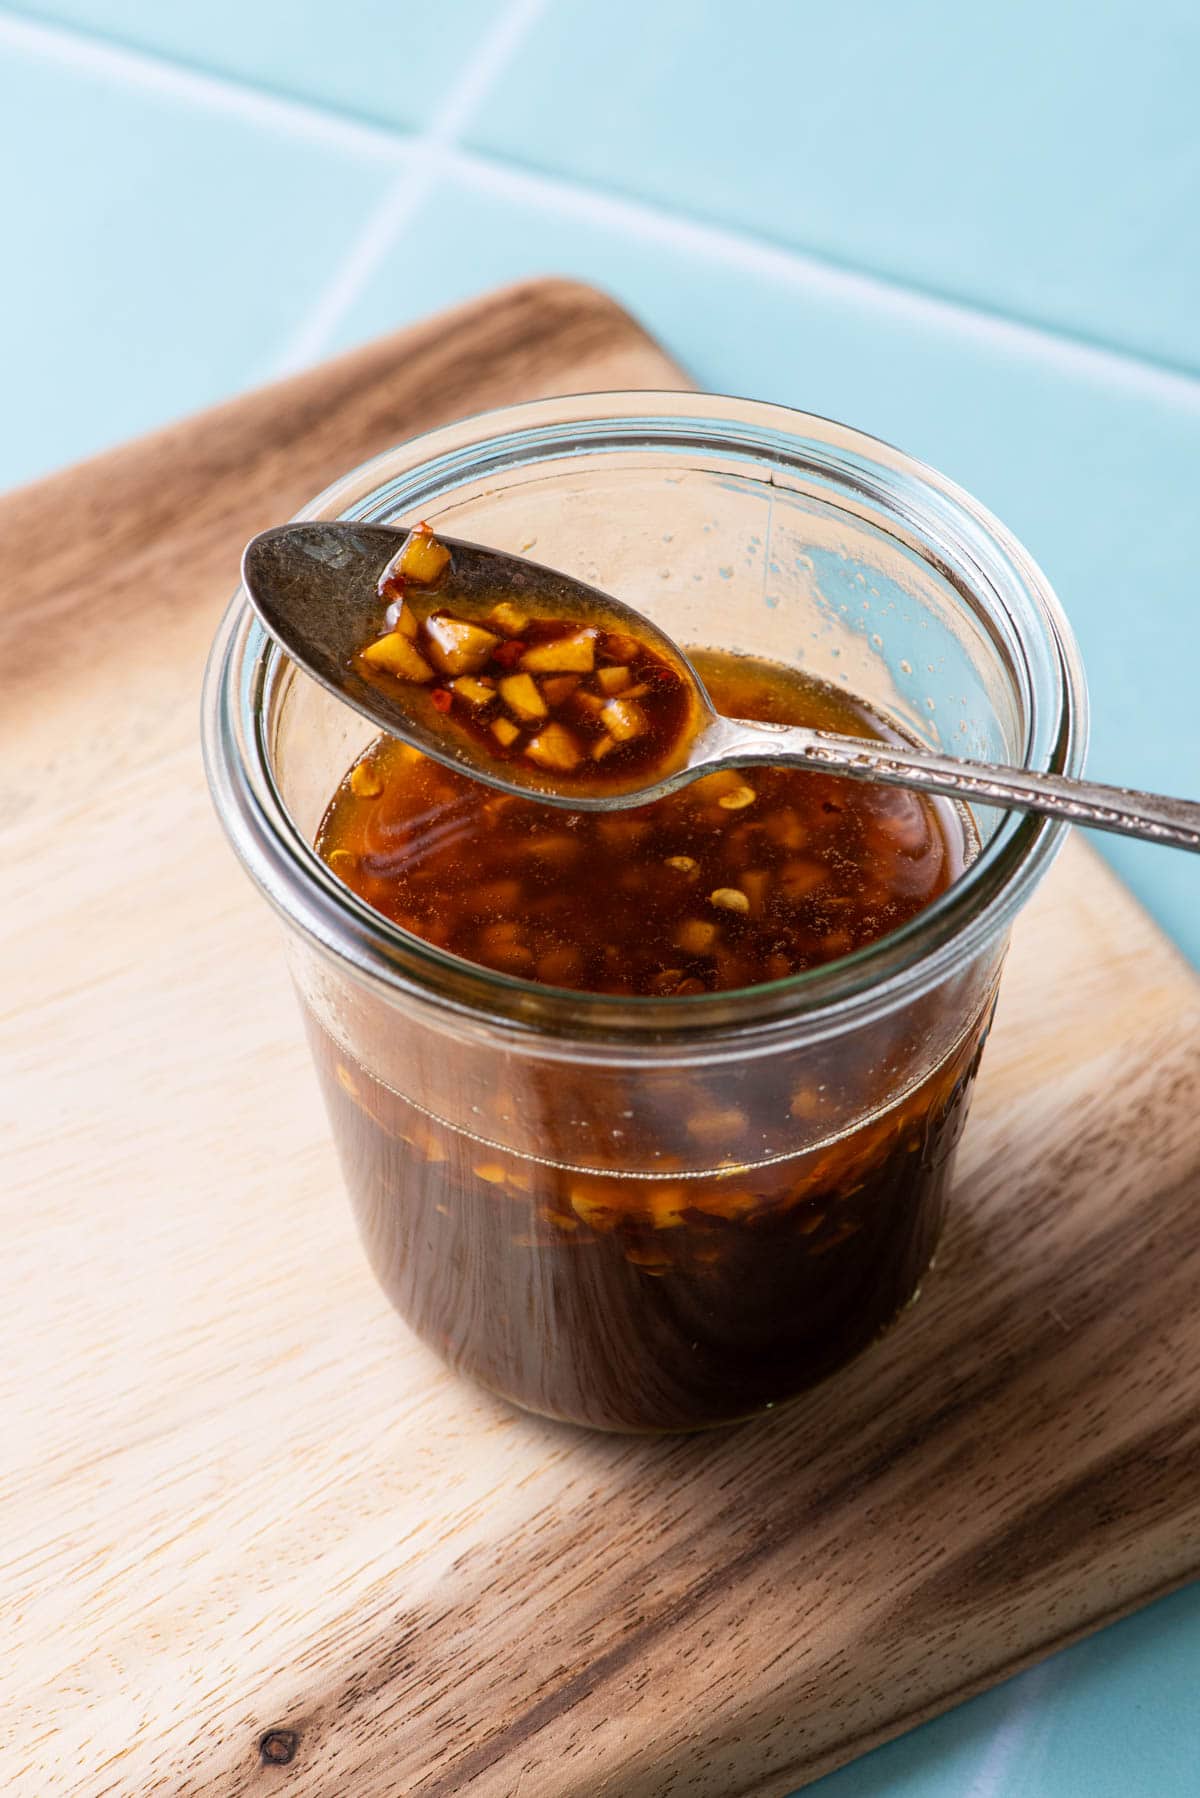 Homemade healthy stir fry sauce in a glass jar.